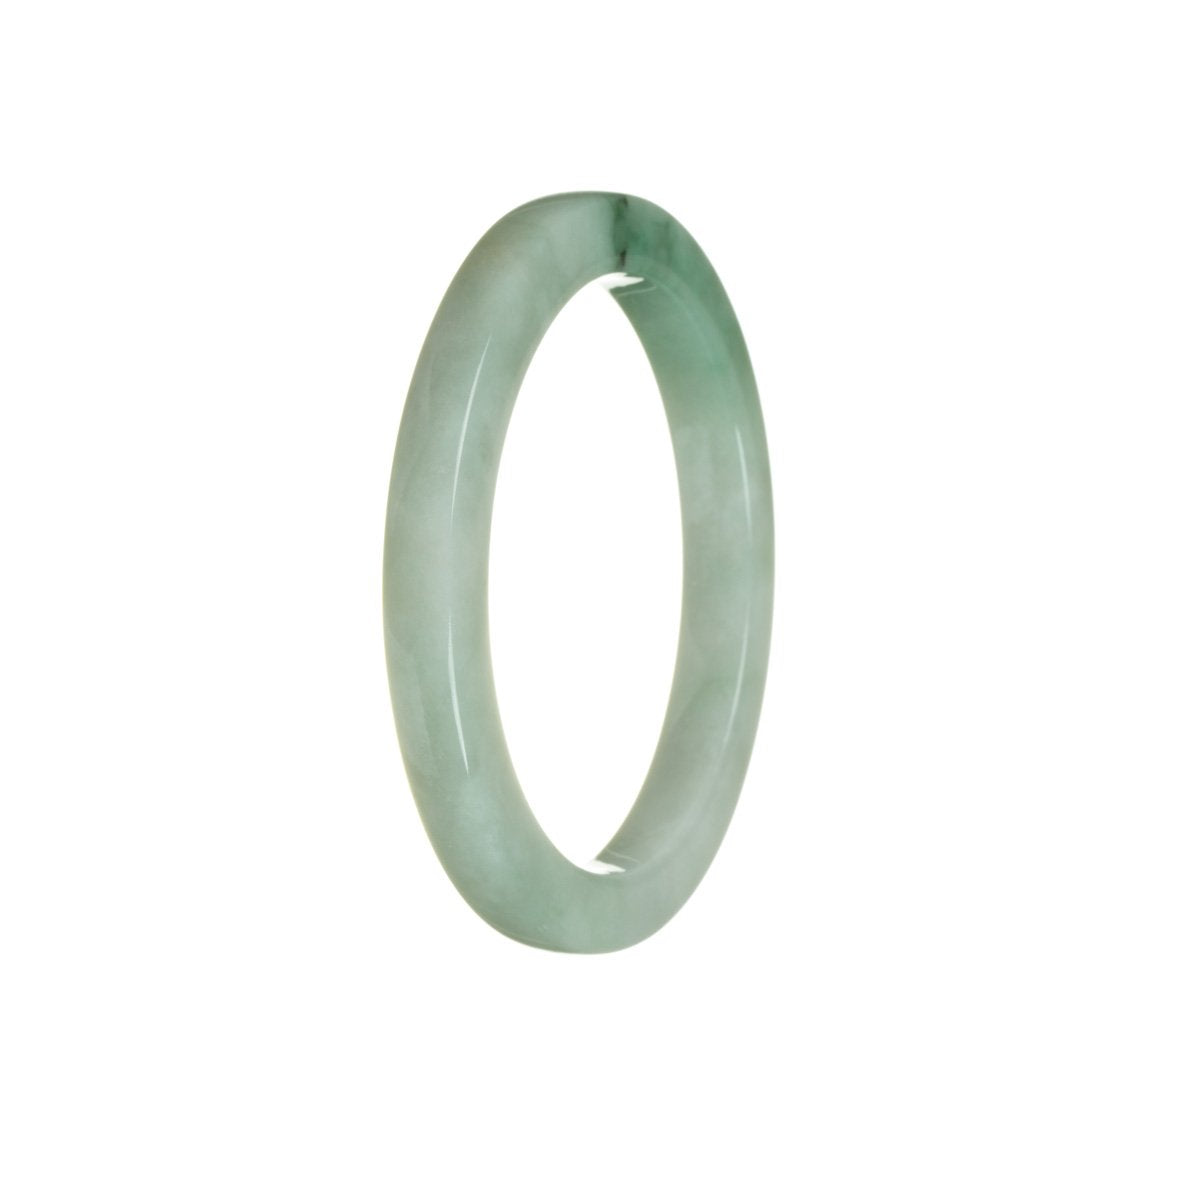 Authentic Grade A Pale Green Jadeite Bangle Bracelet - 56mm Thin